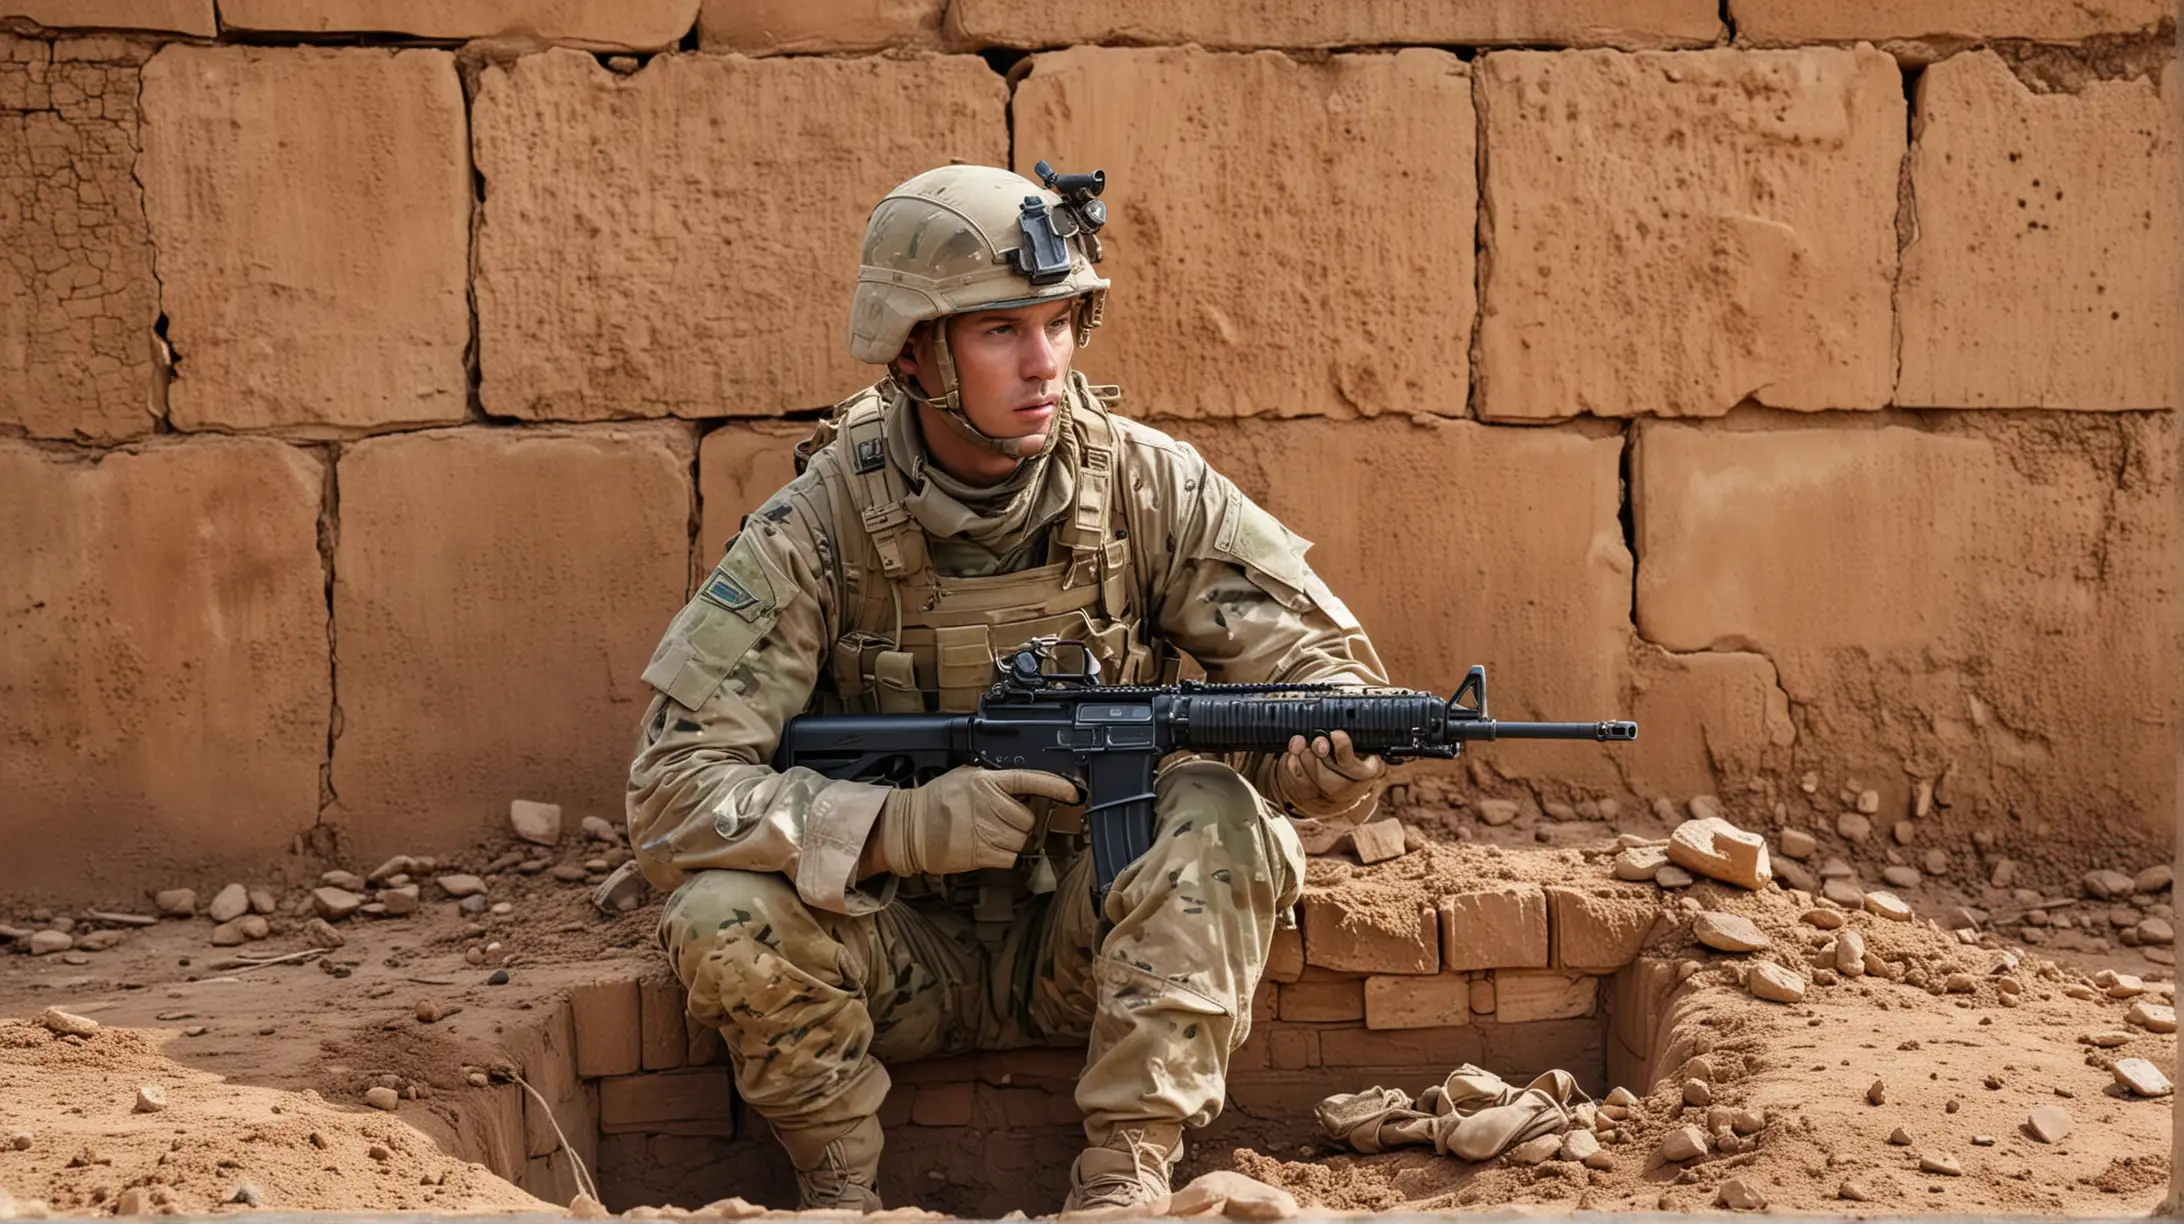 Modern Soldier in Multicam Gear with Light Machine Gun in Dirt Dugout